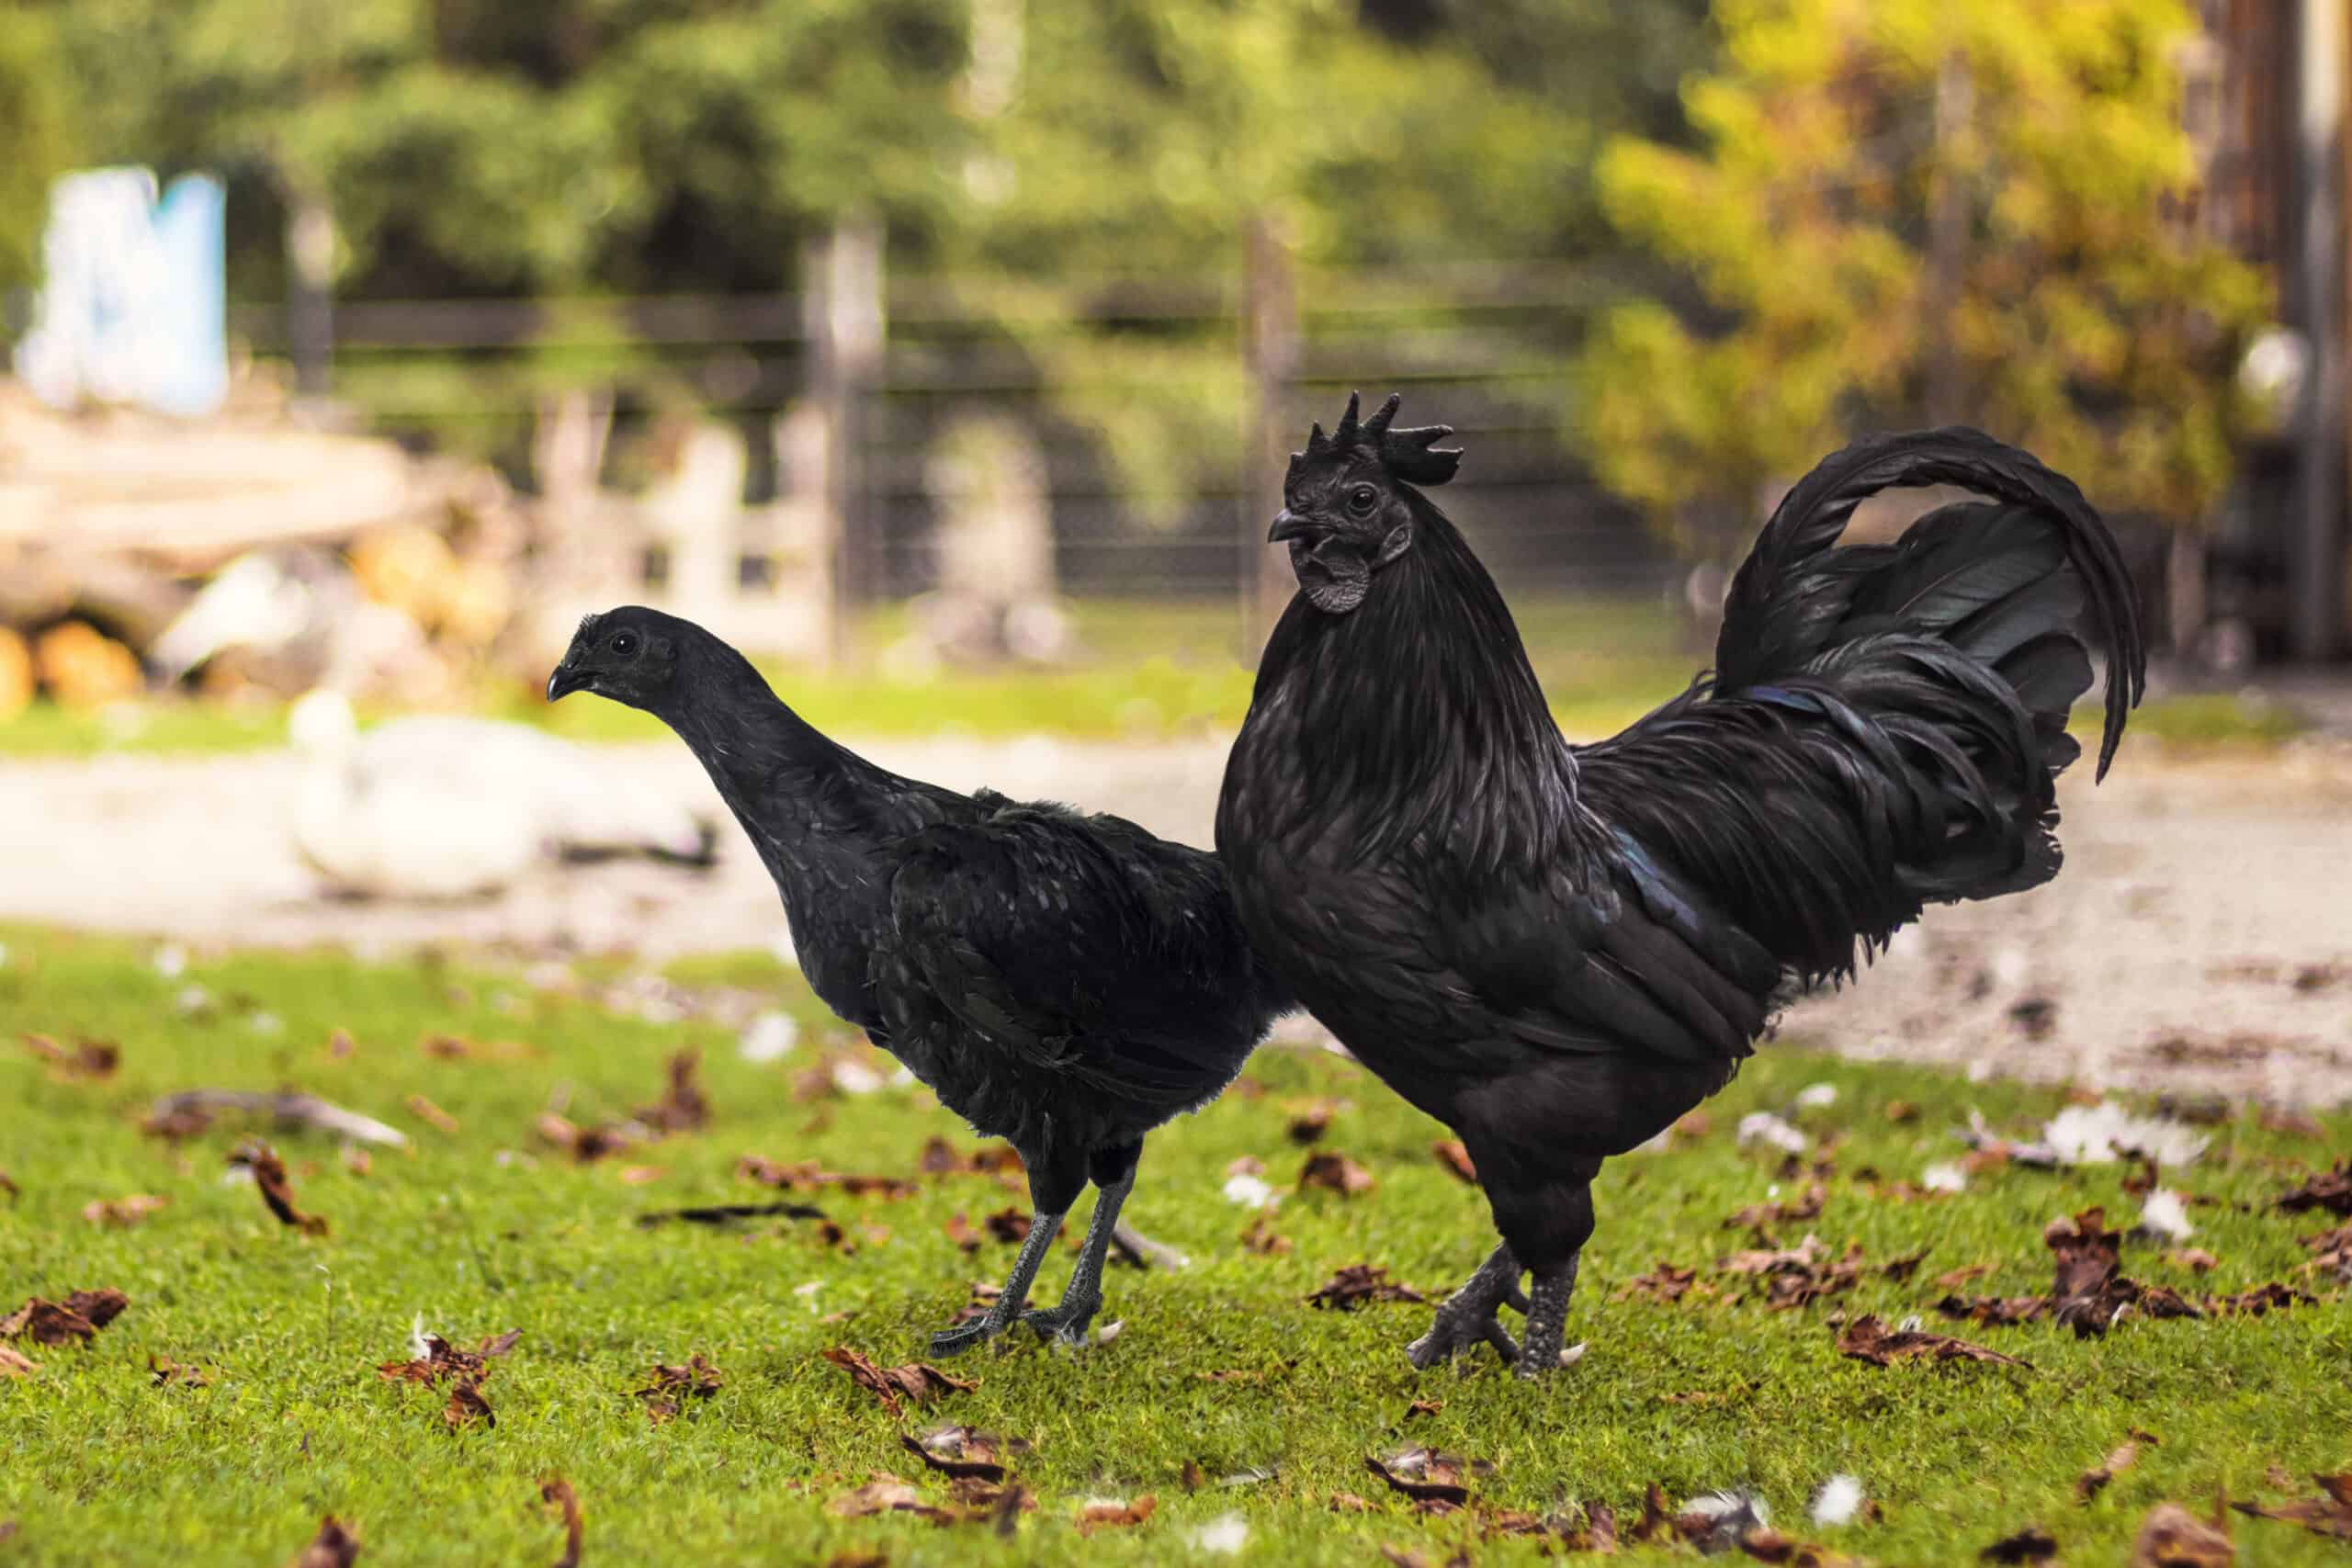 Identifying Ayam Cemani Chickens